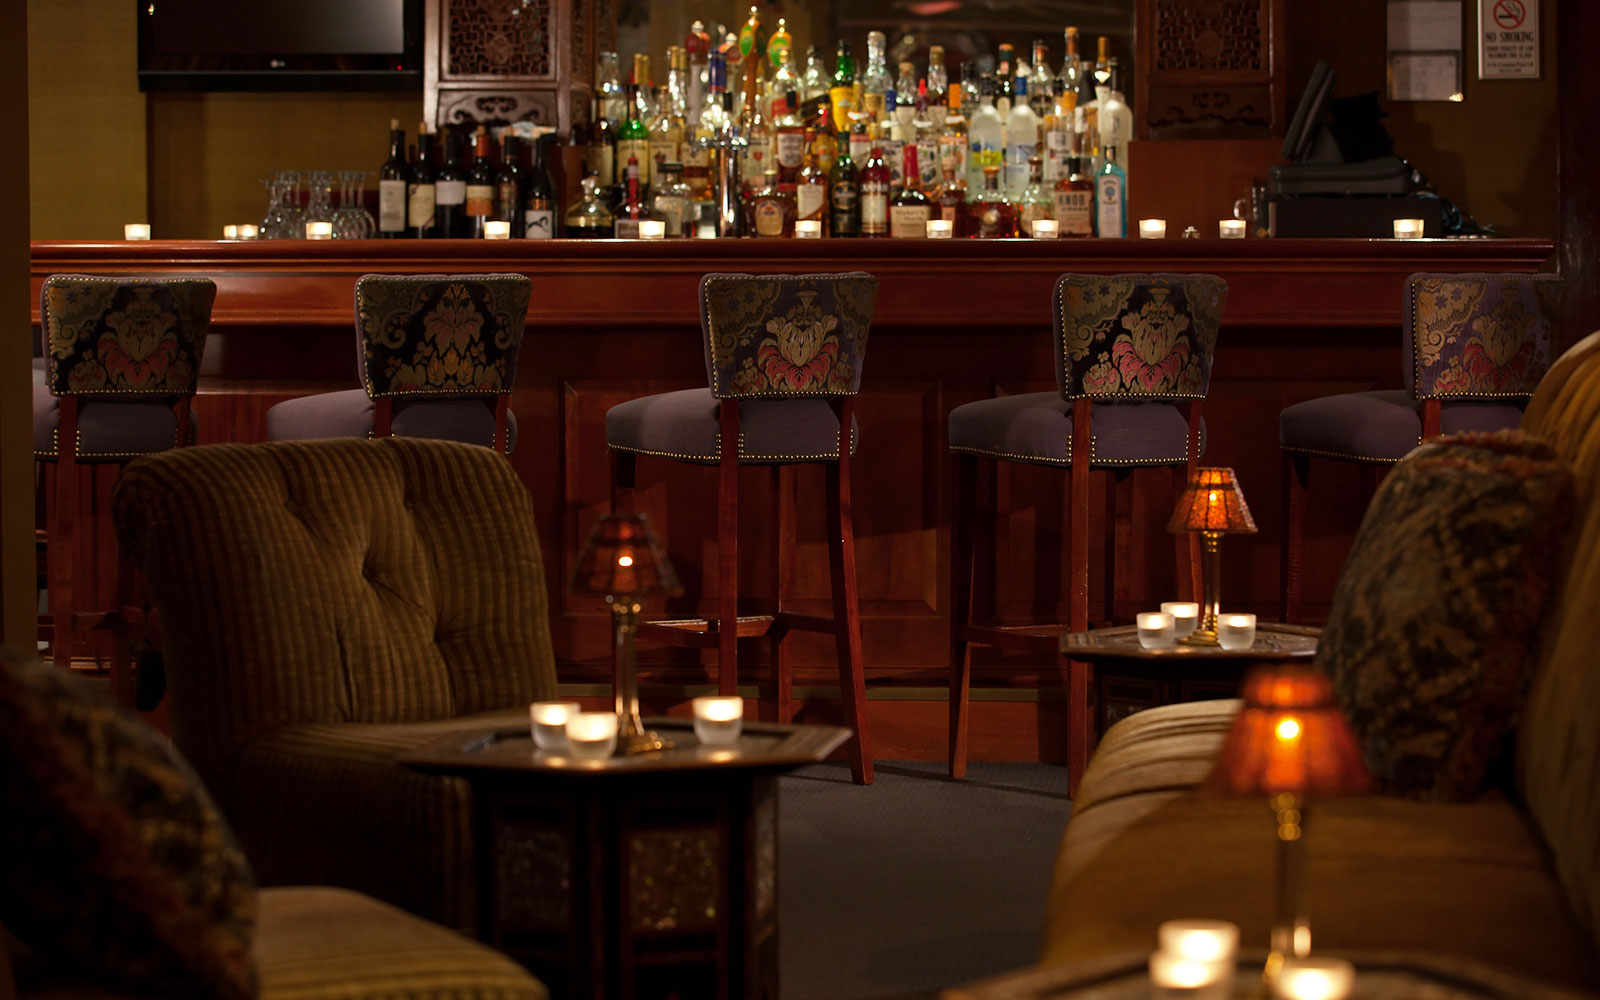 Hotel Lombardy, Washington D.C. Venetian Room Bar